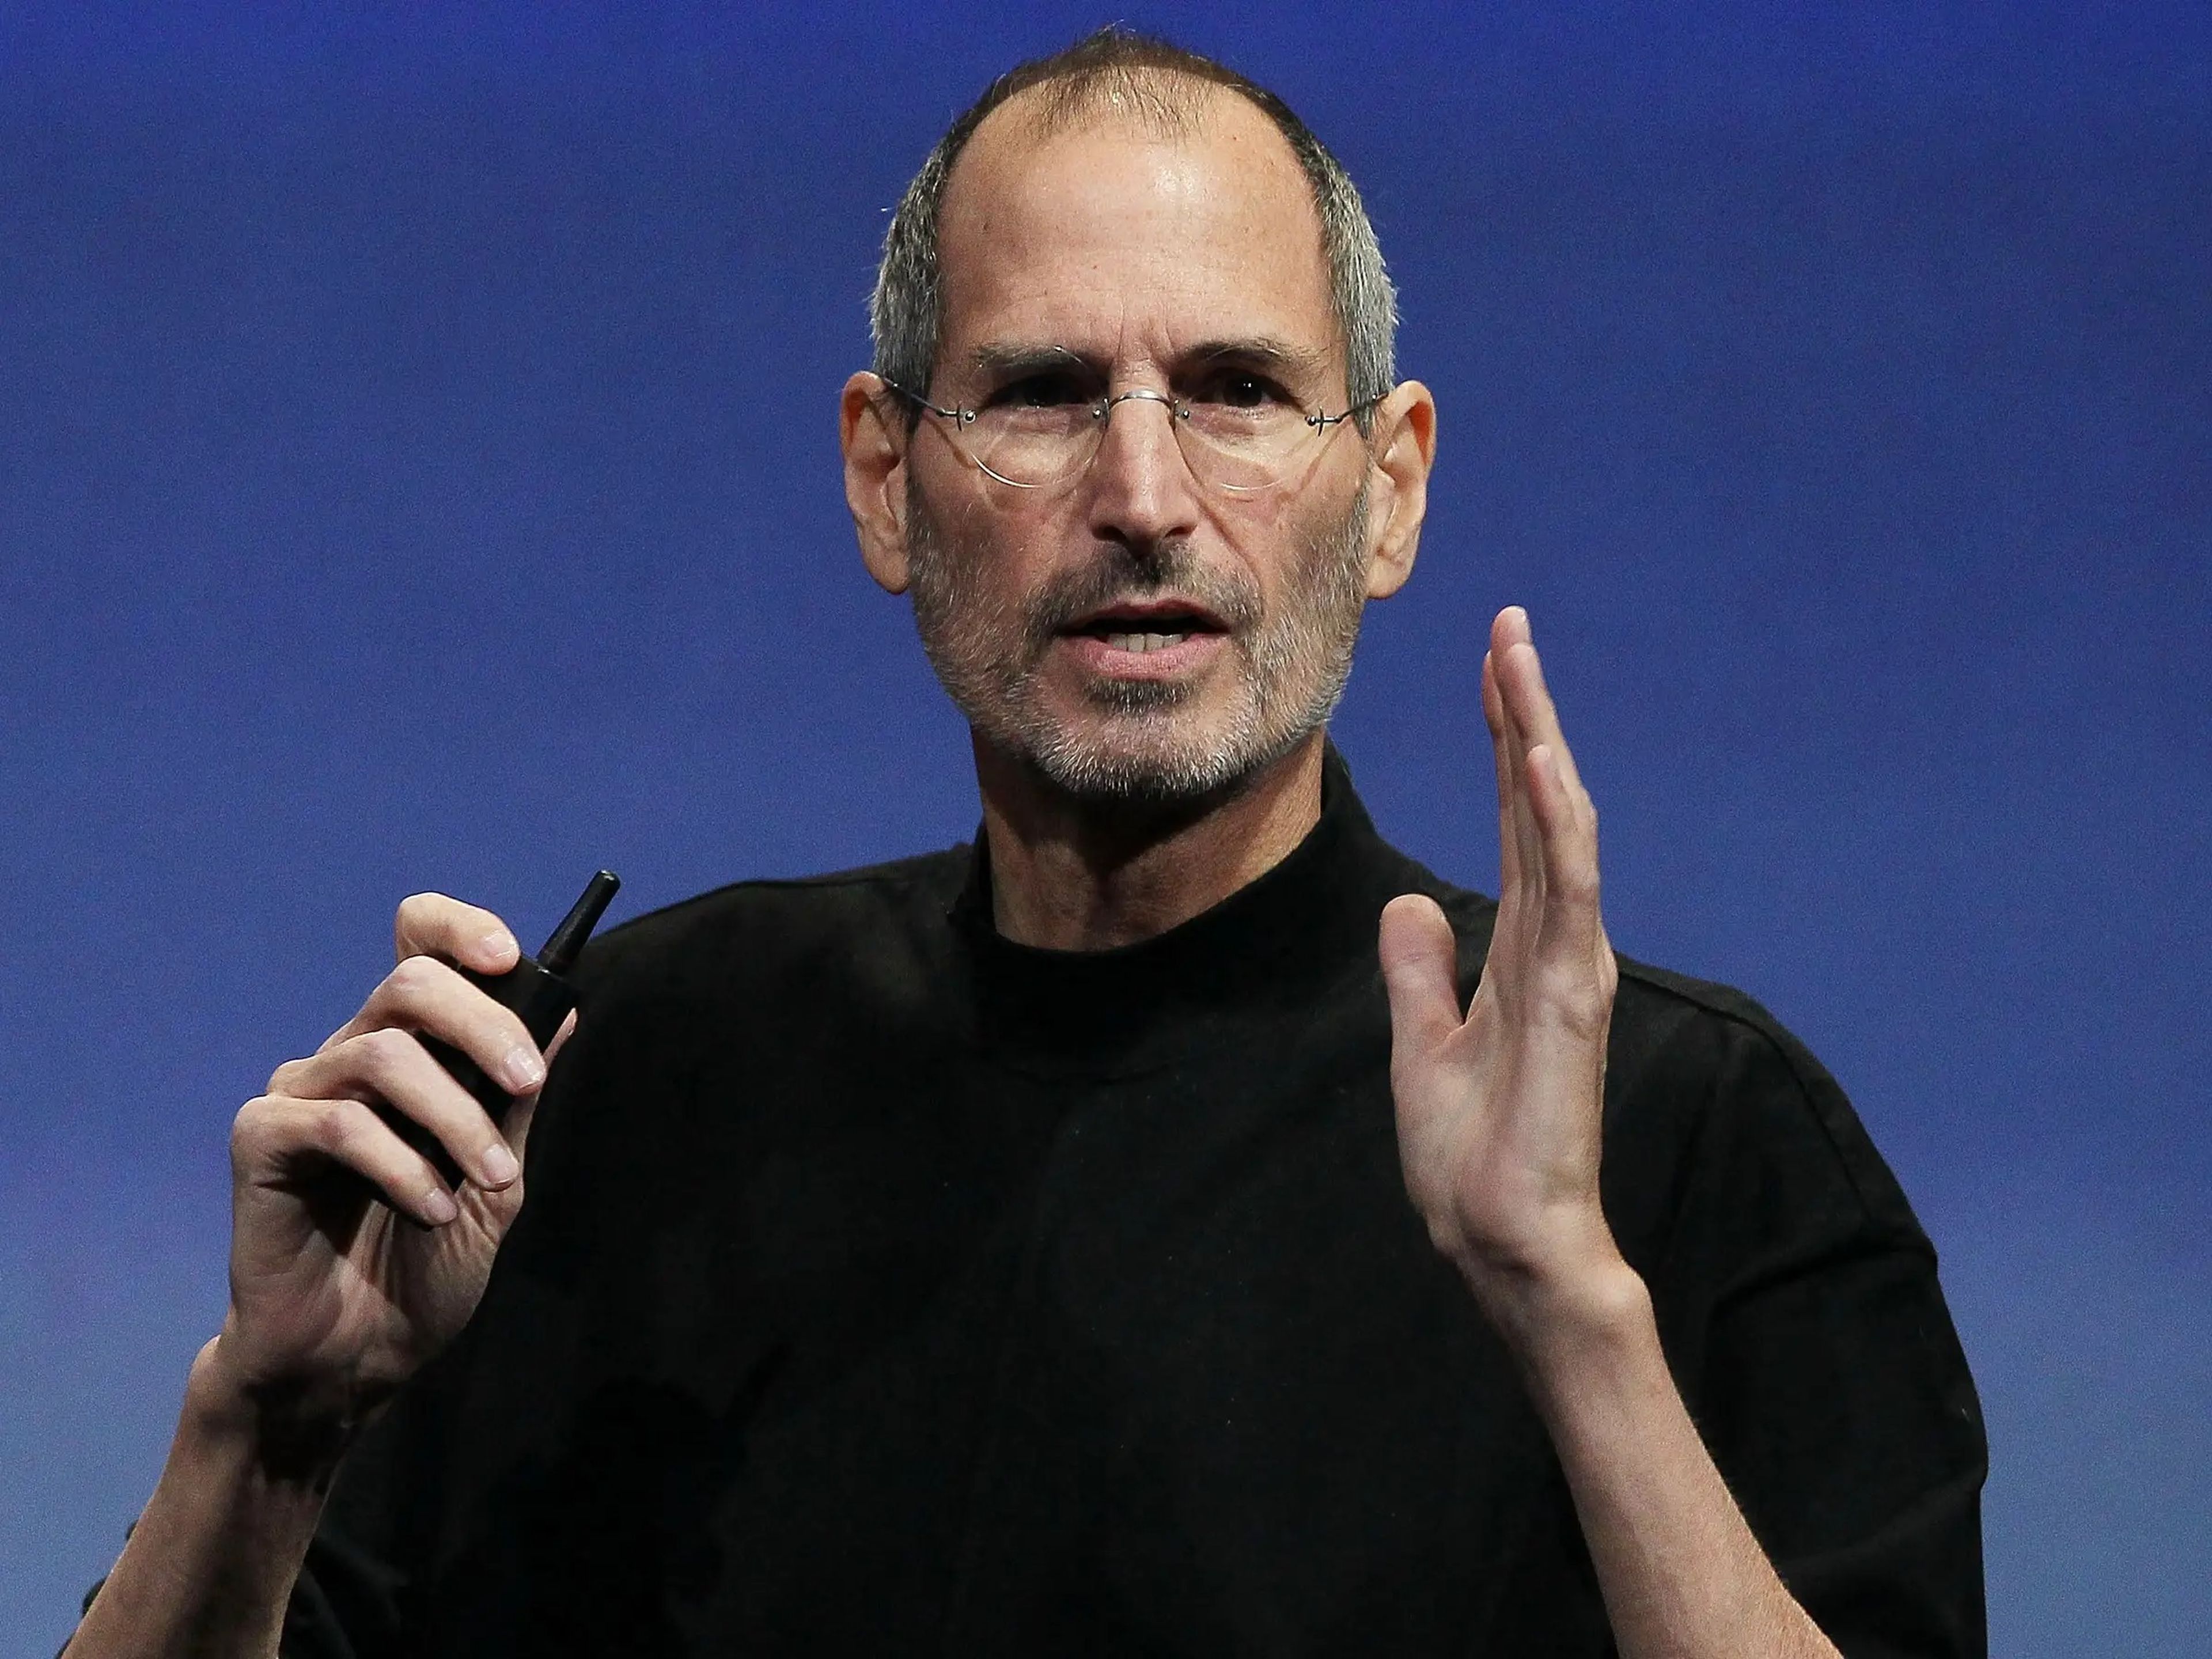 Steve Jobs quiso iniciar una "guerra termonuclear" por culpa de Android, el sistema operativo para smartphones de Google.